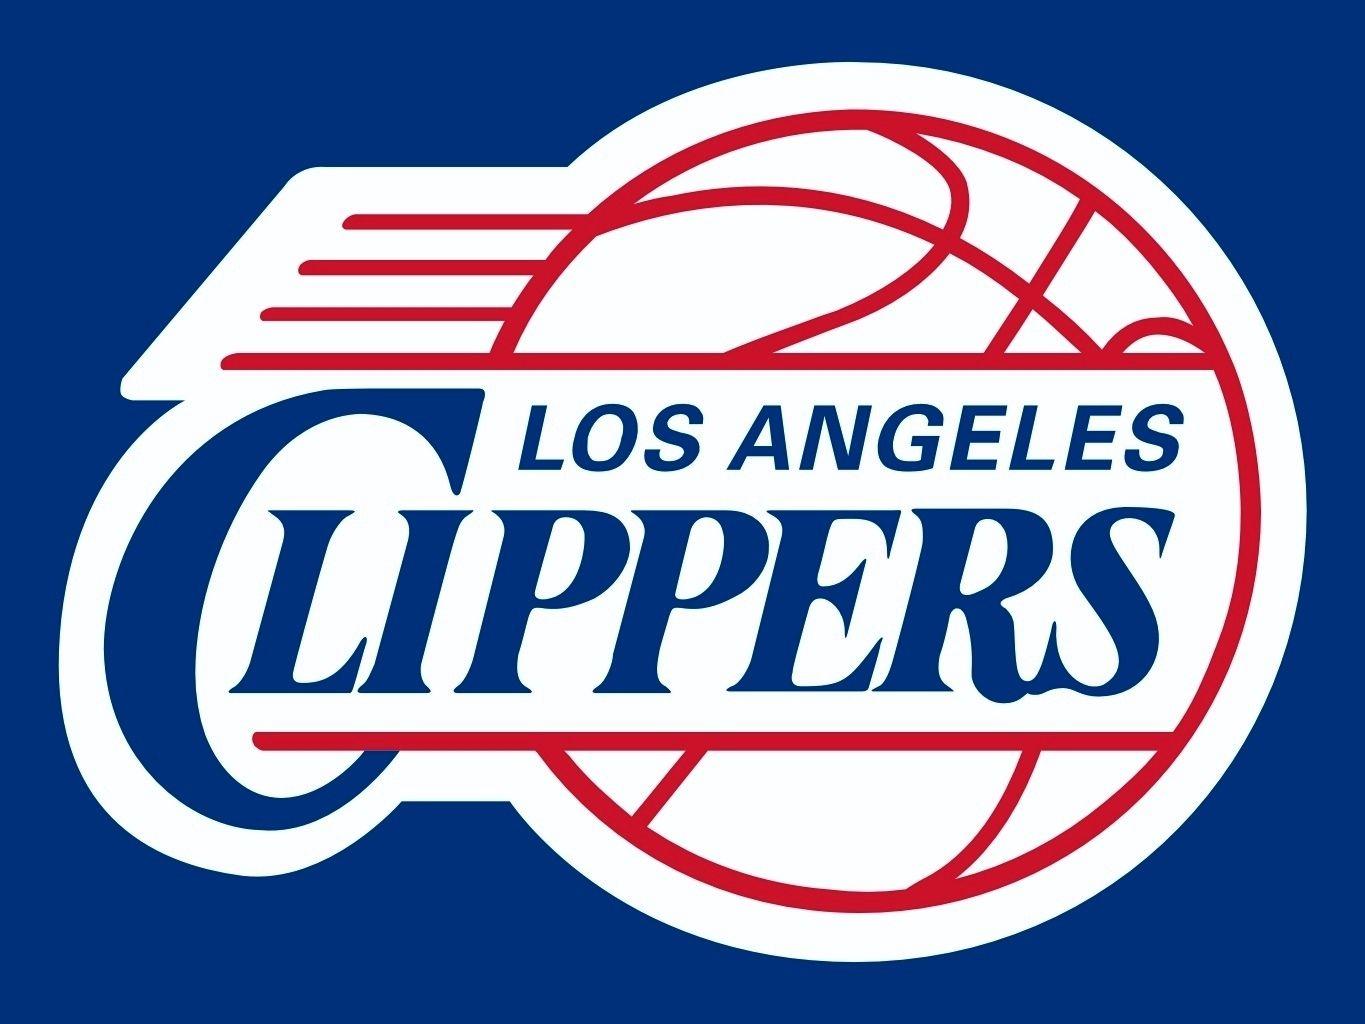 Clippers Logo - Image - Los Angeles Clippers logo.jpg | Uncyclopedia | FANDOM ...